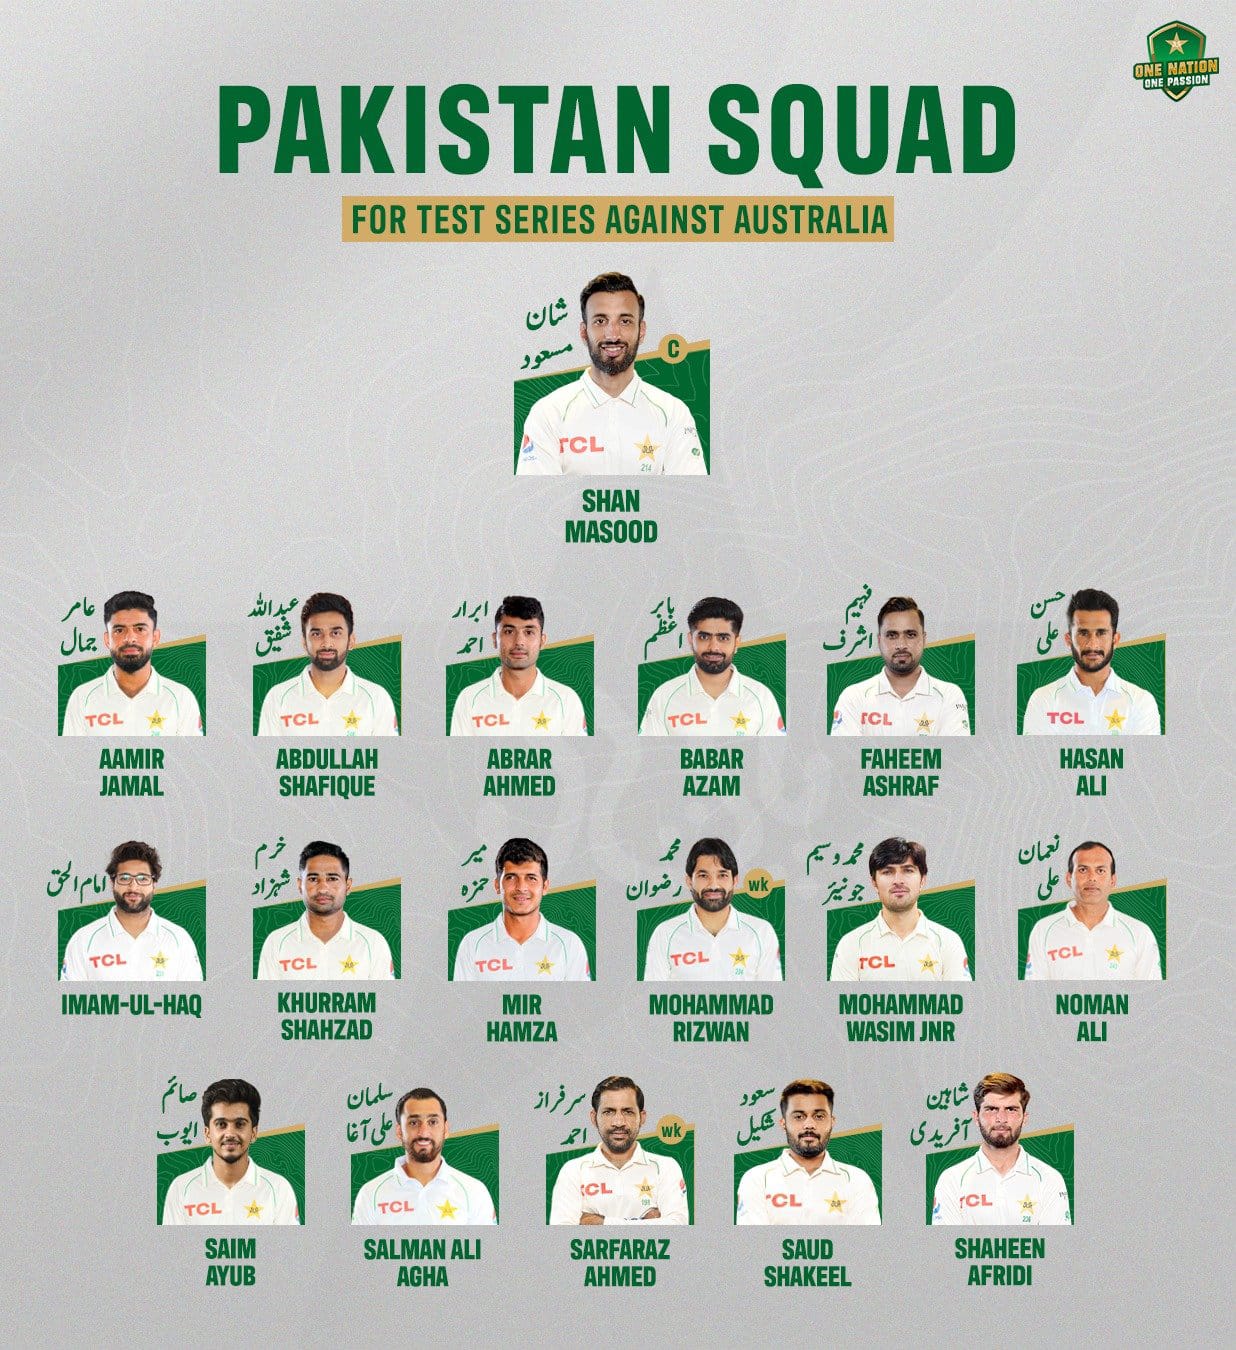 Pakistan's Squad for Test series against might Australia